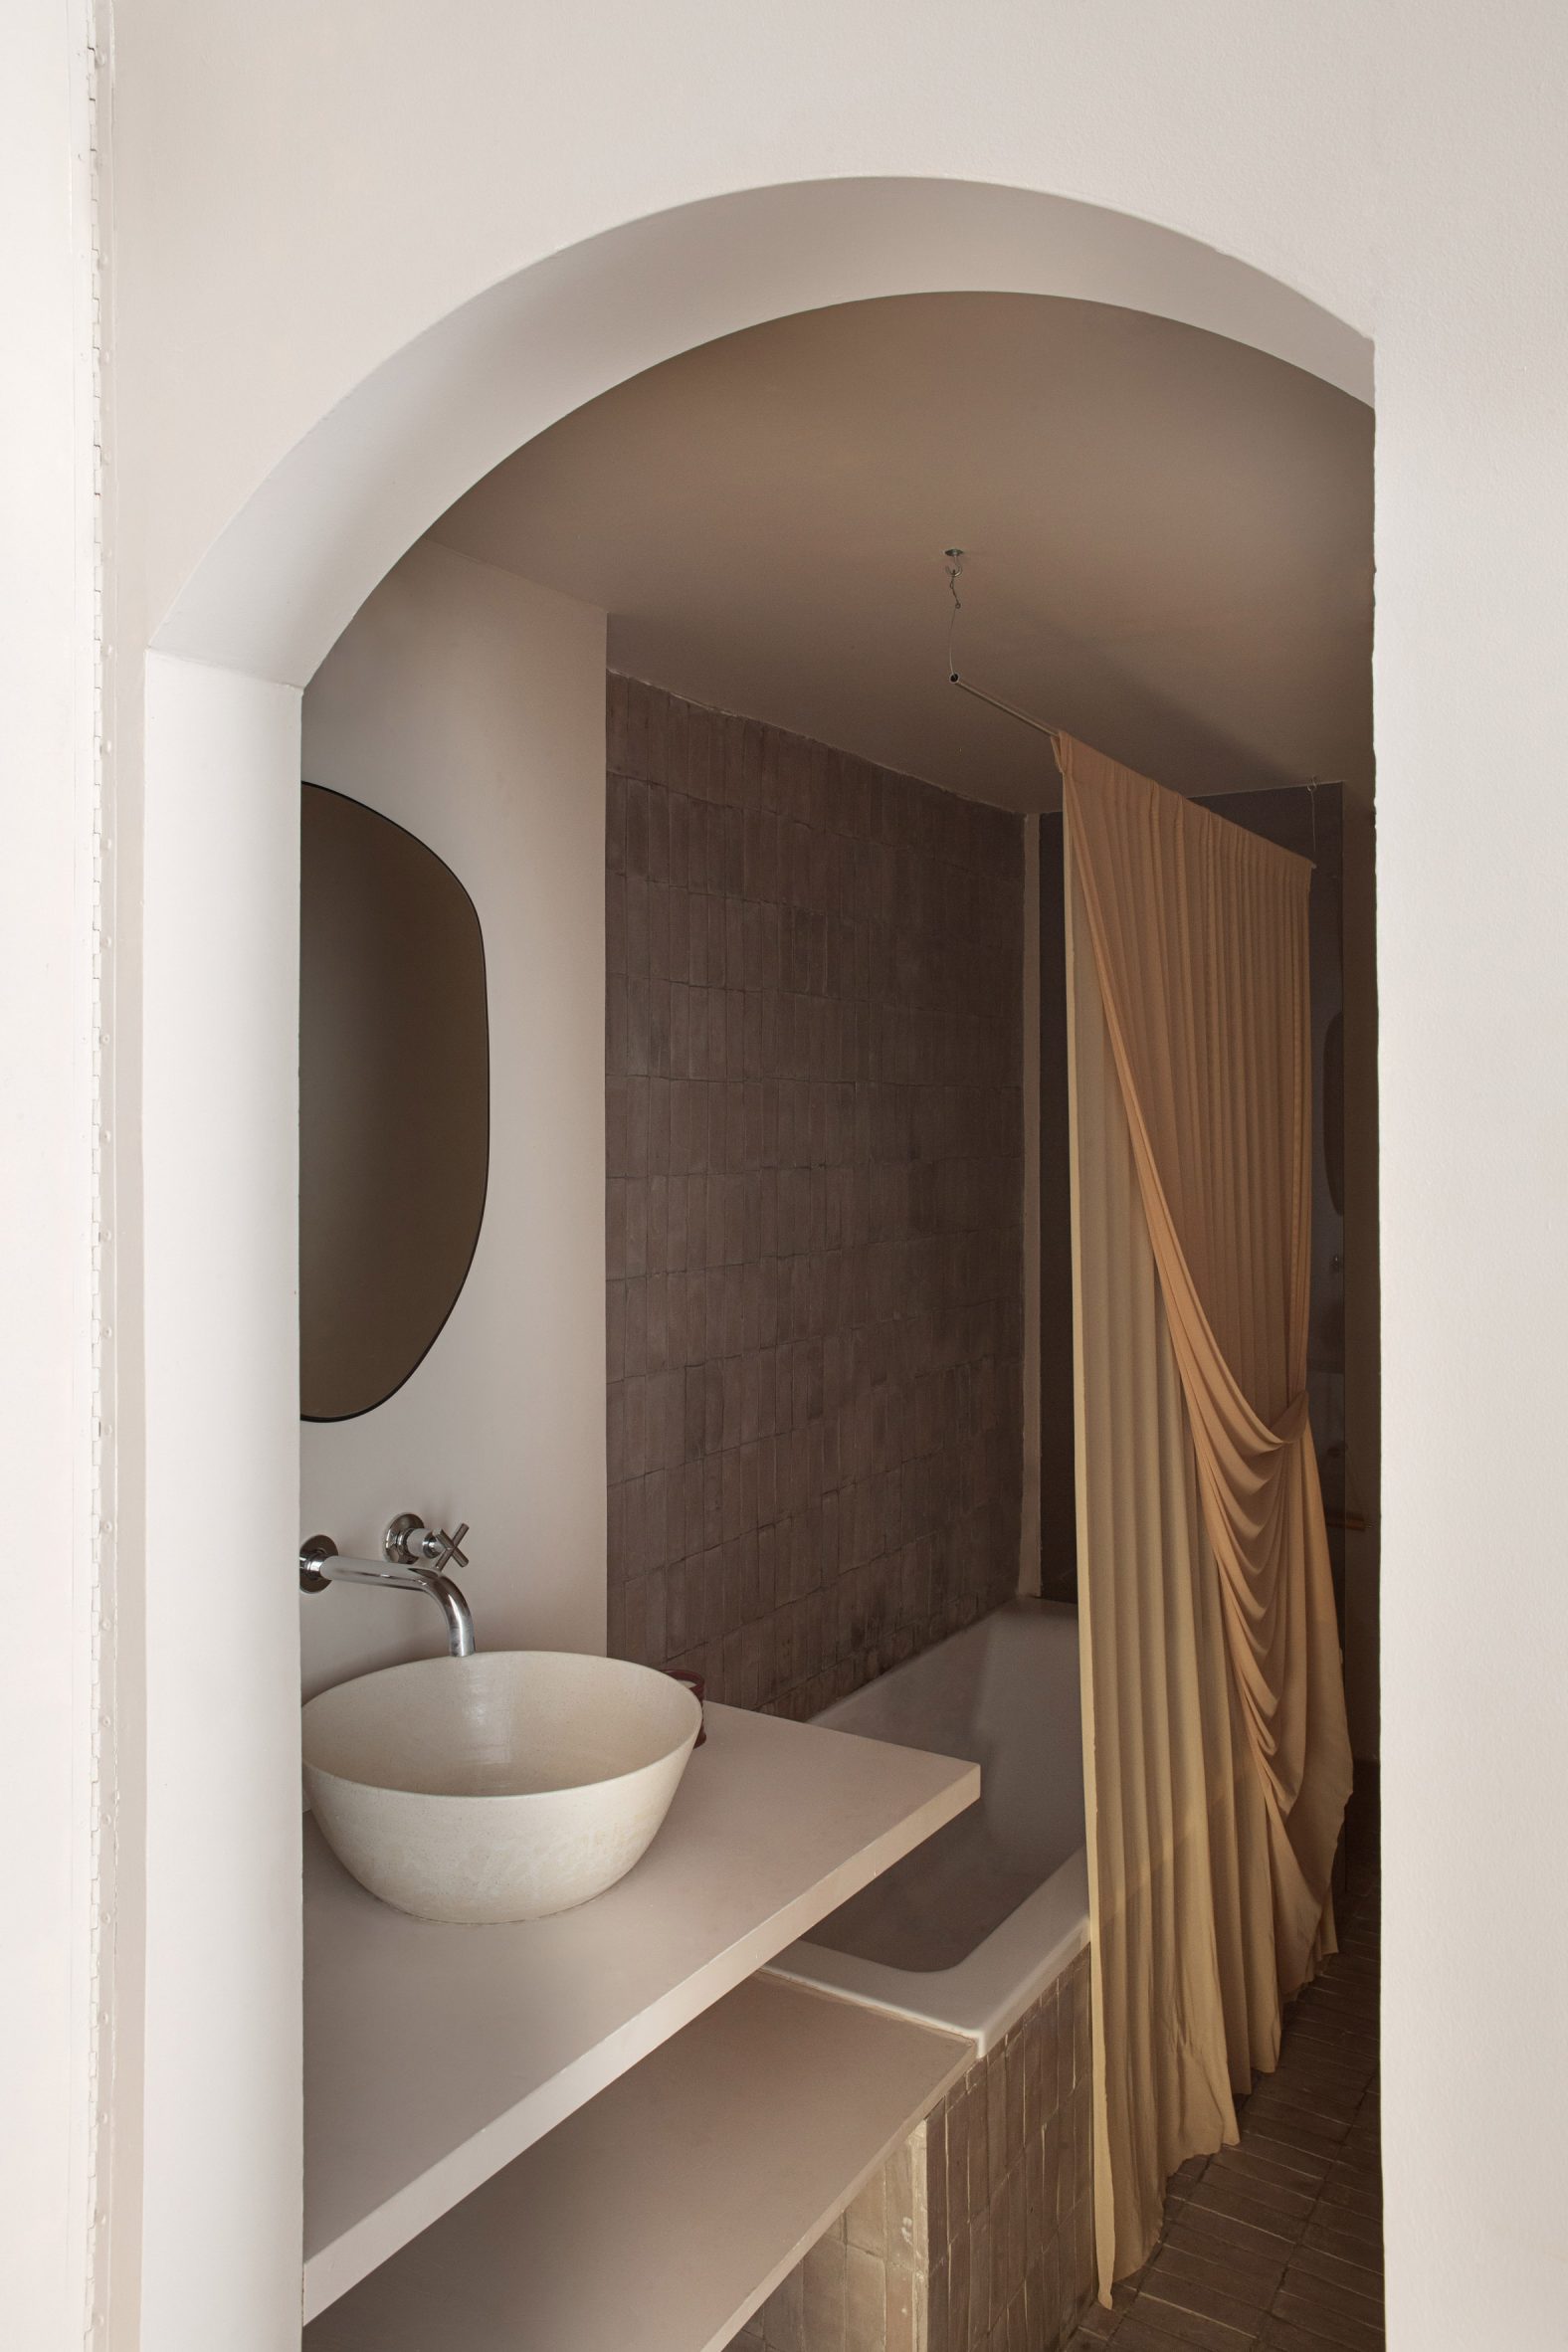 Bathroom with yellow nylon curtain in Madrid apartment by Matteo Ferrari and Carlota Gallo